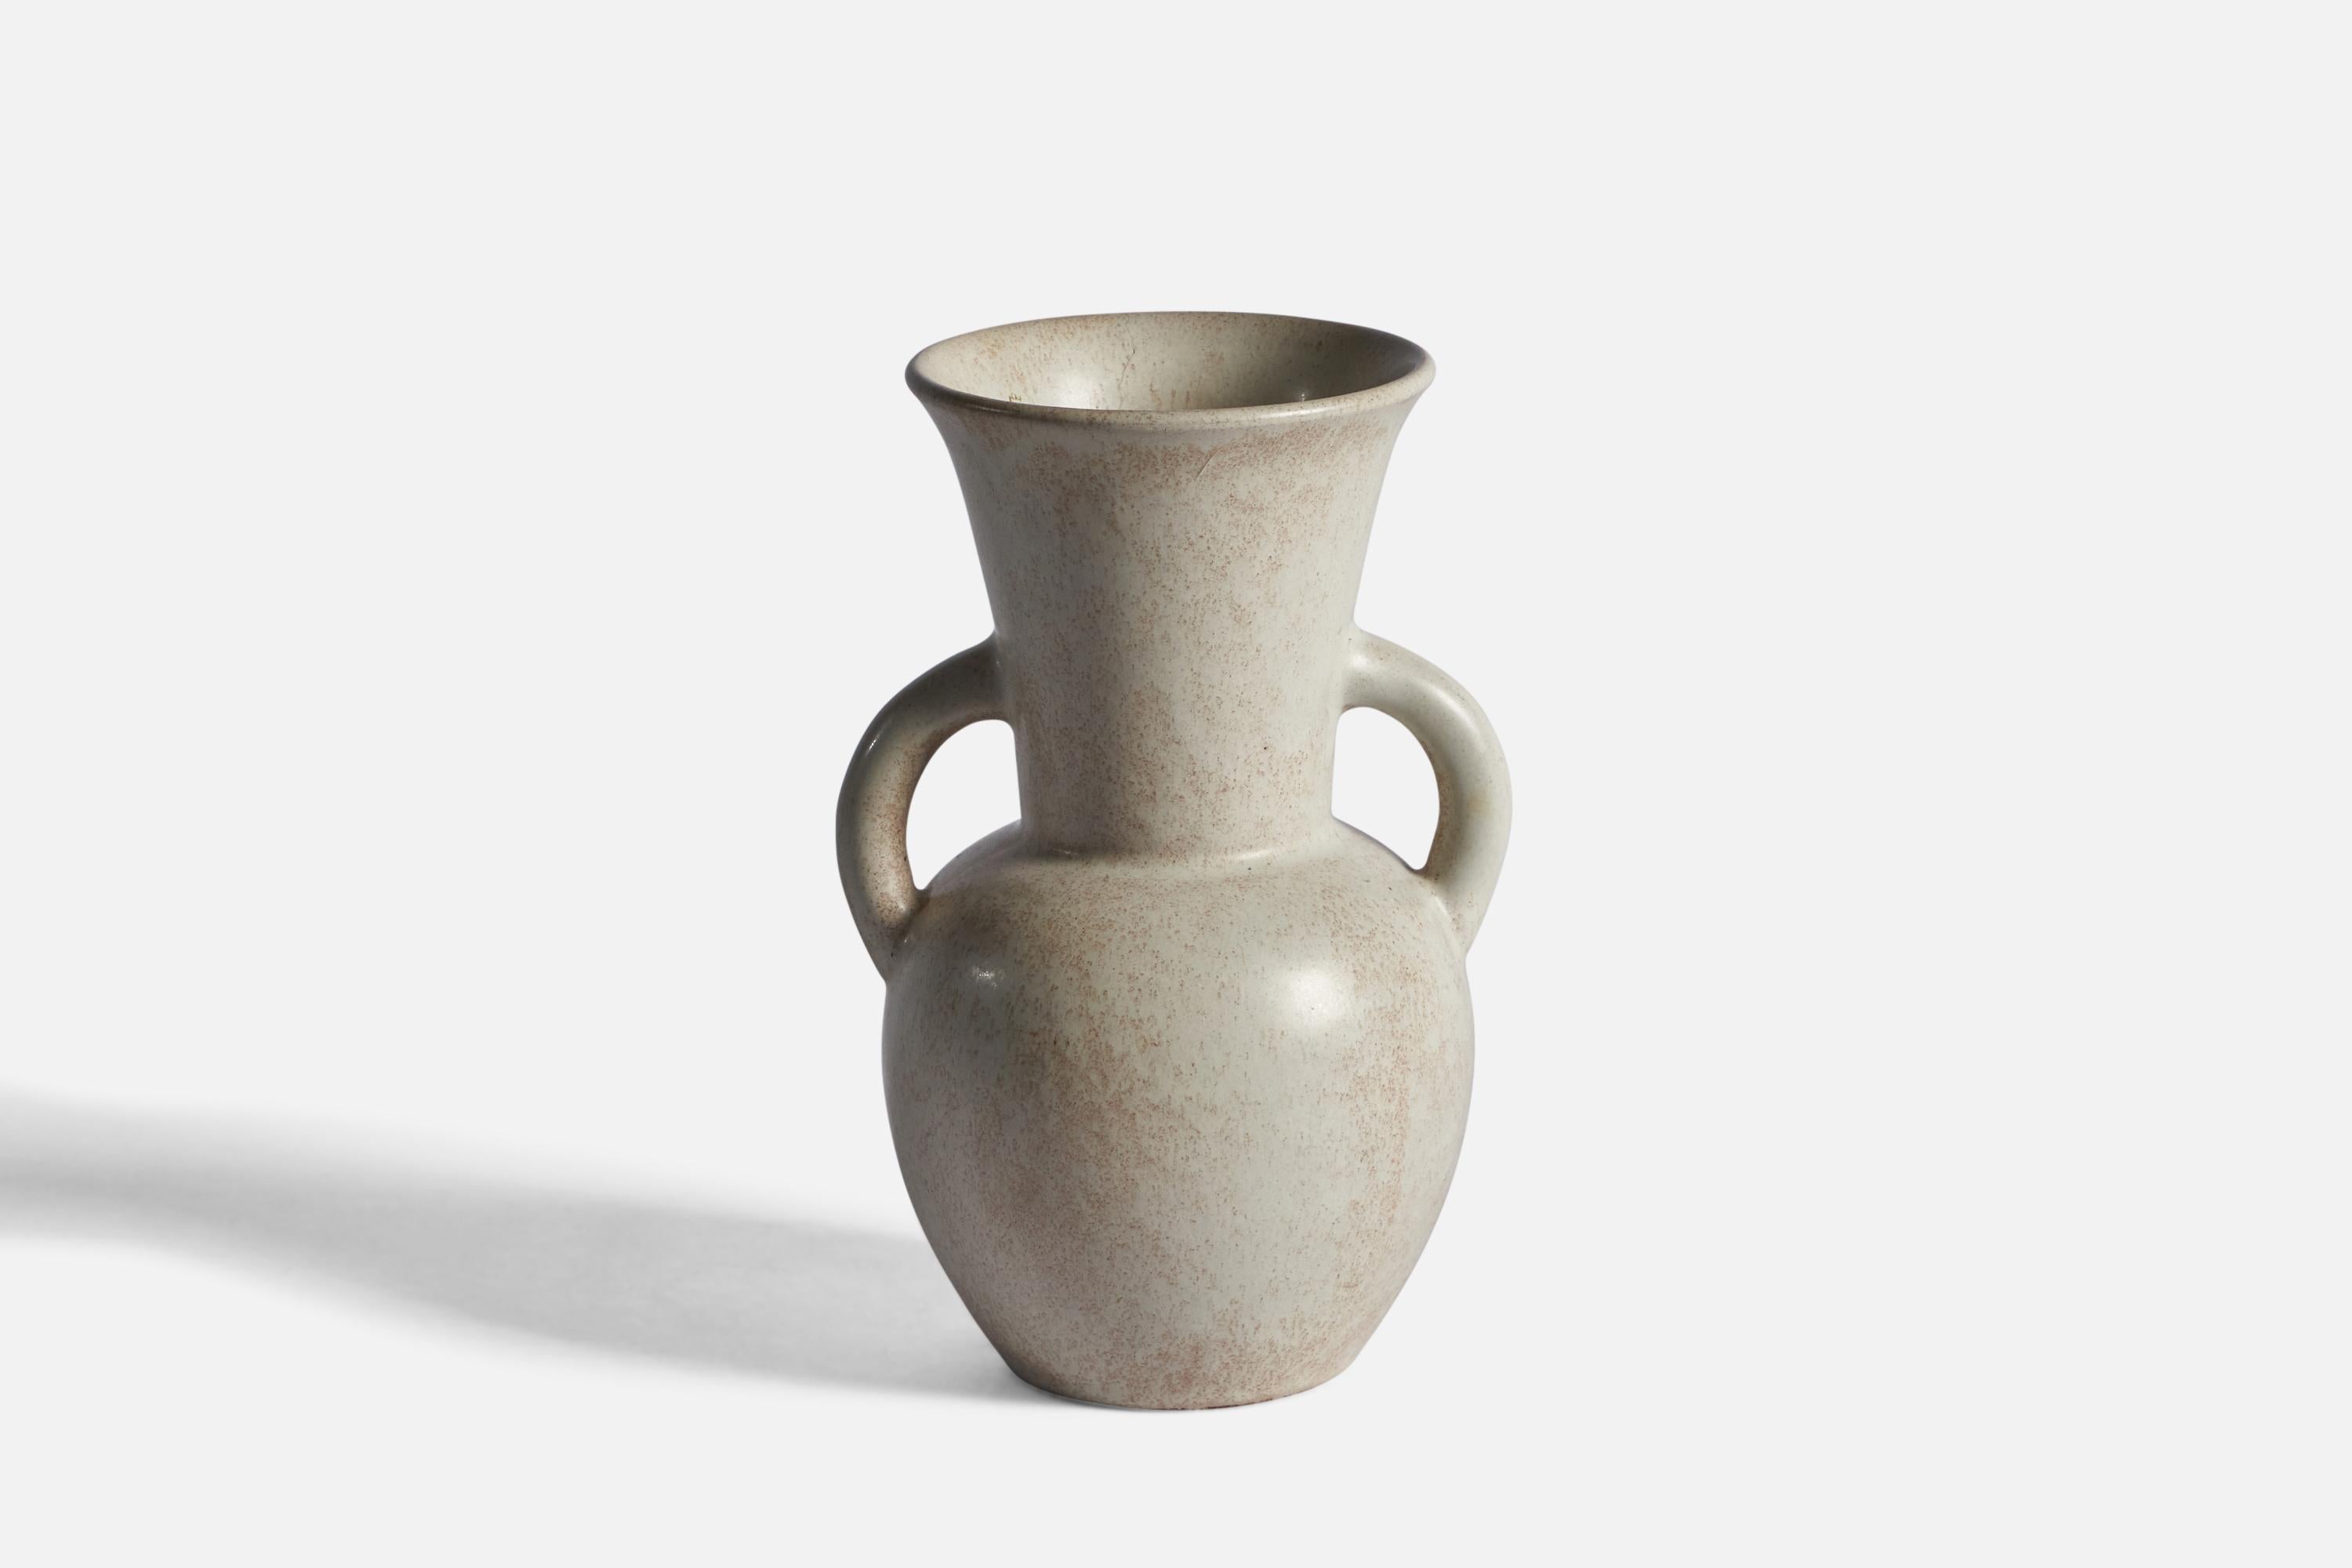 A white-glazed earthenware vase designed and produced by Upsala Ekeby, Sweden, c. 1930s.